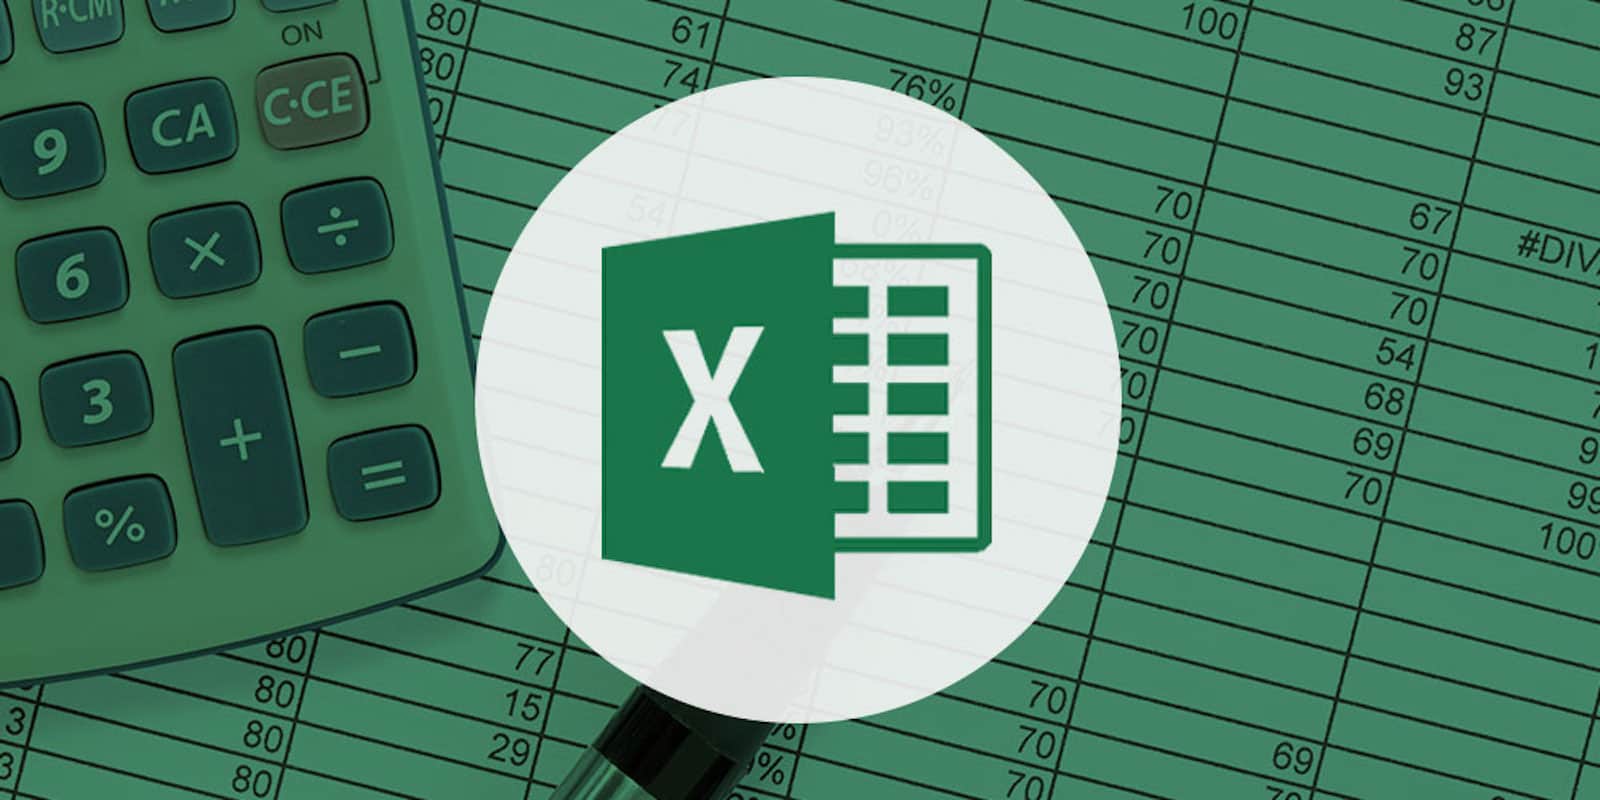 Microsoft Excel Specialist Certification Bundle